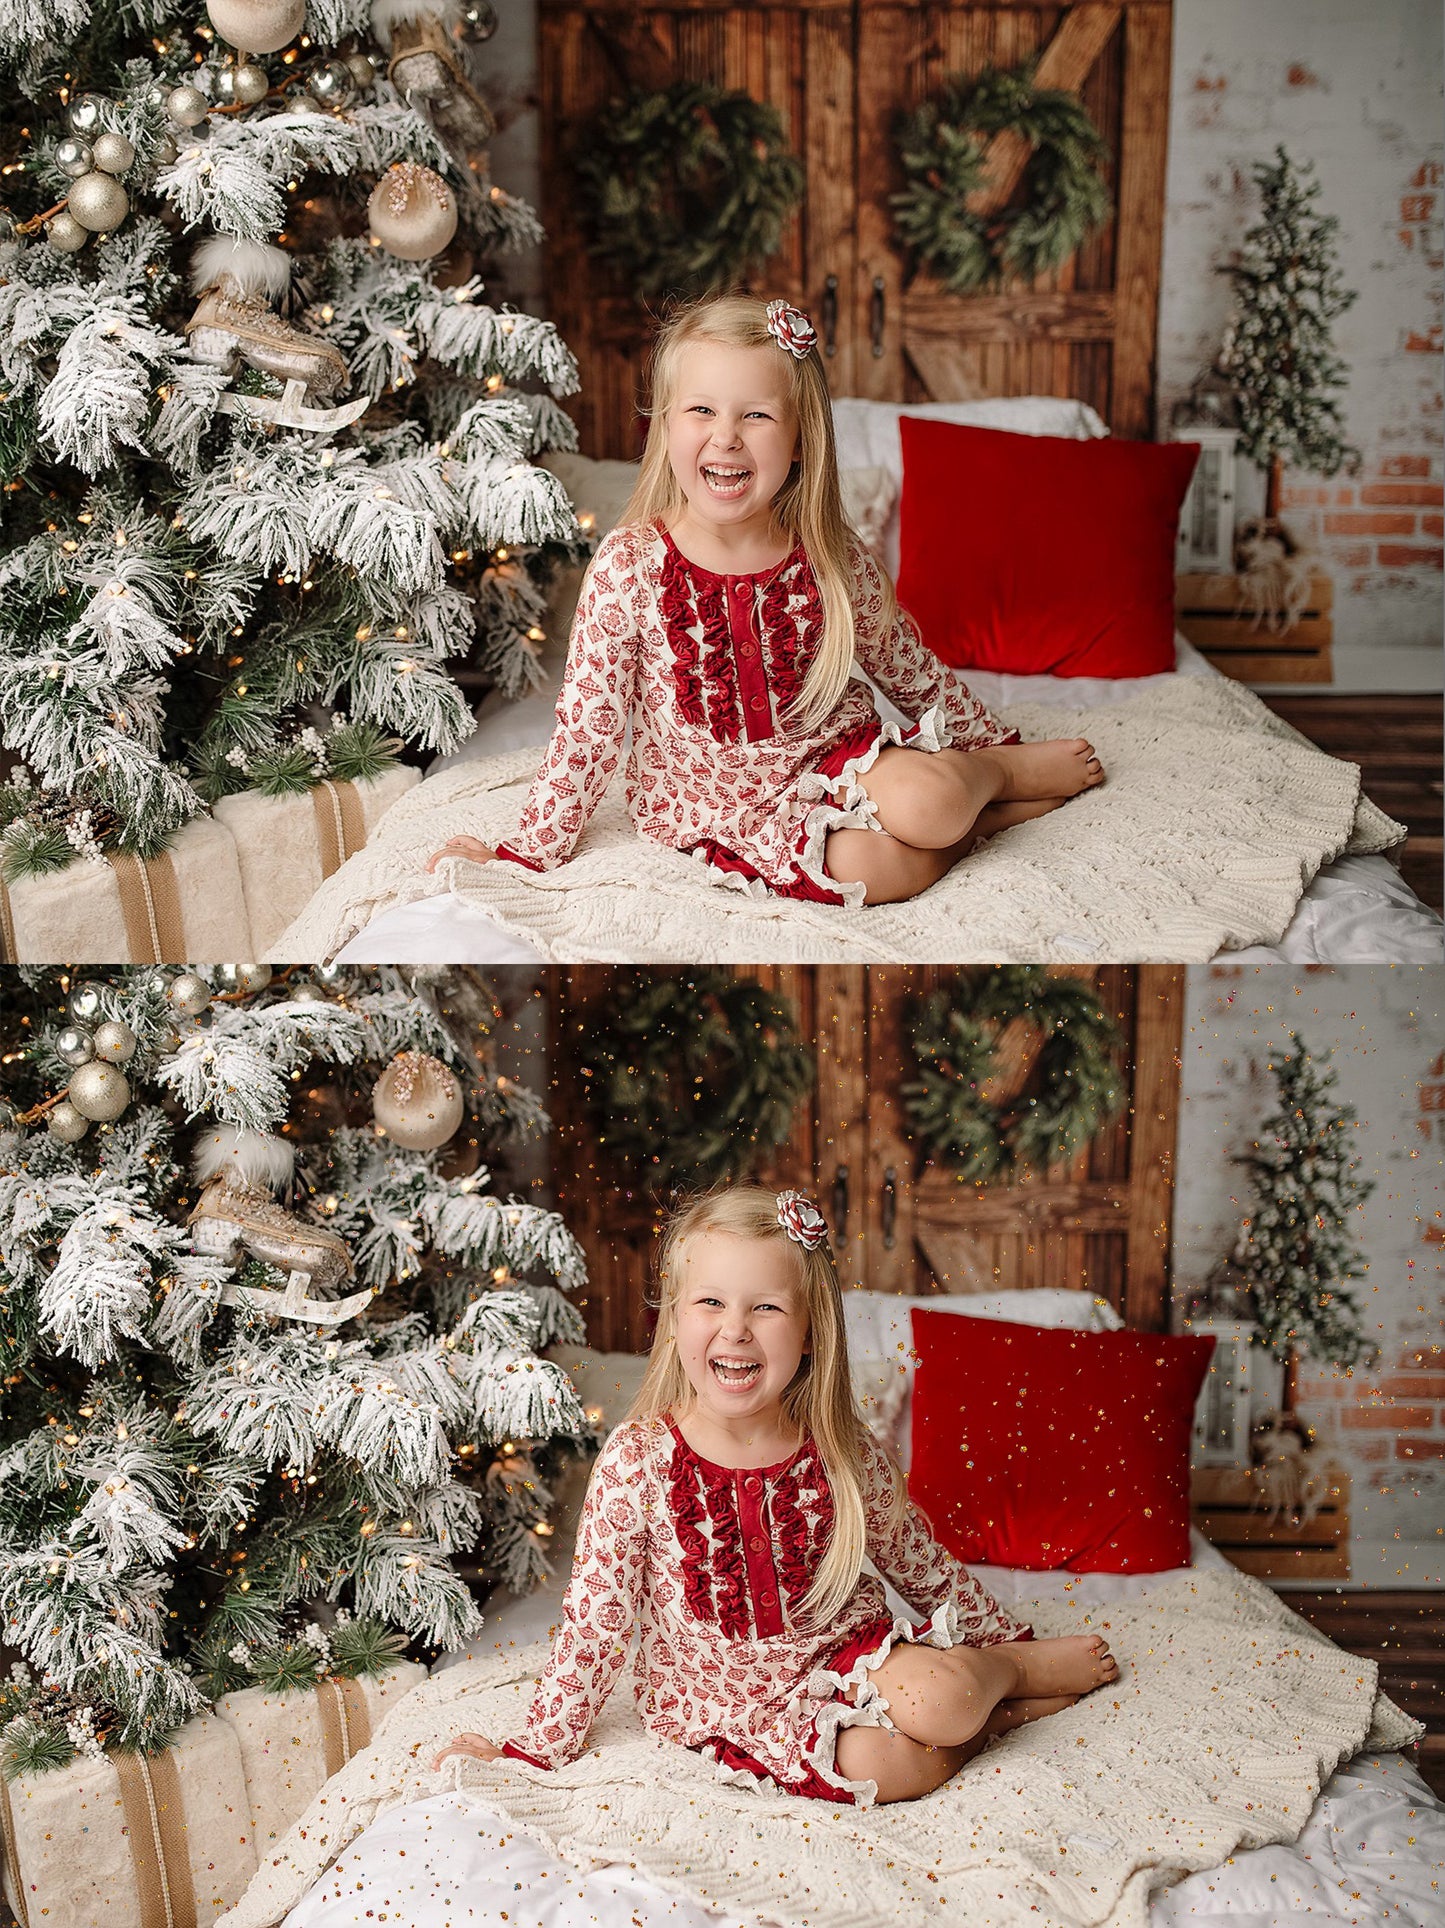 Christmas Glitter Photo Overlays